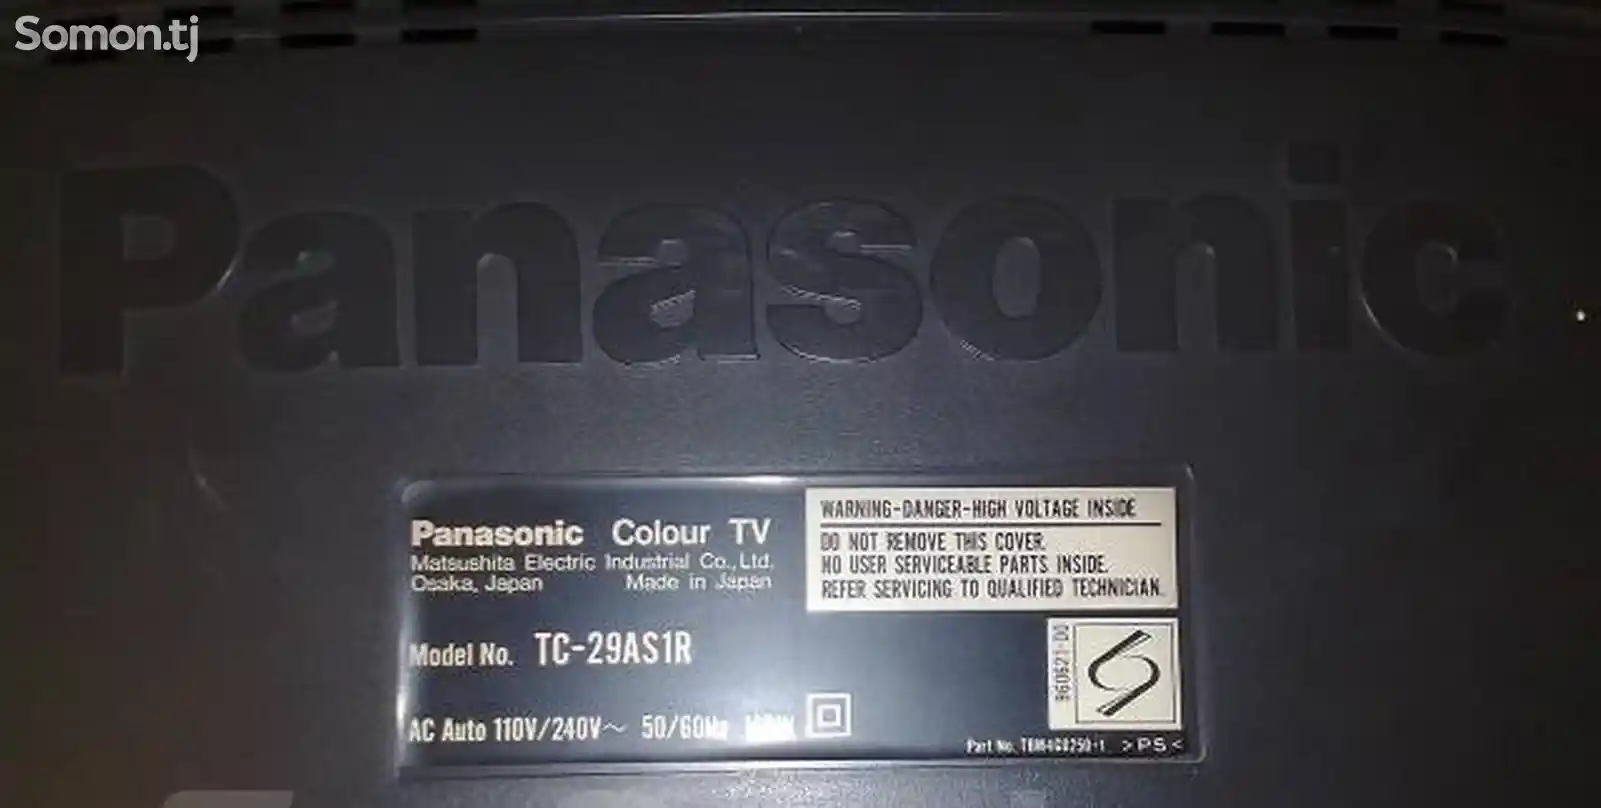 Японский телевизор Panasonic Colour TV TS-29AS1R 17system/AV Stereo-2